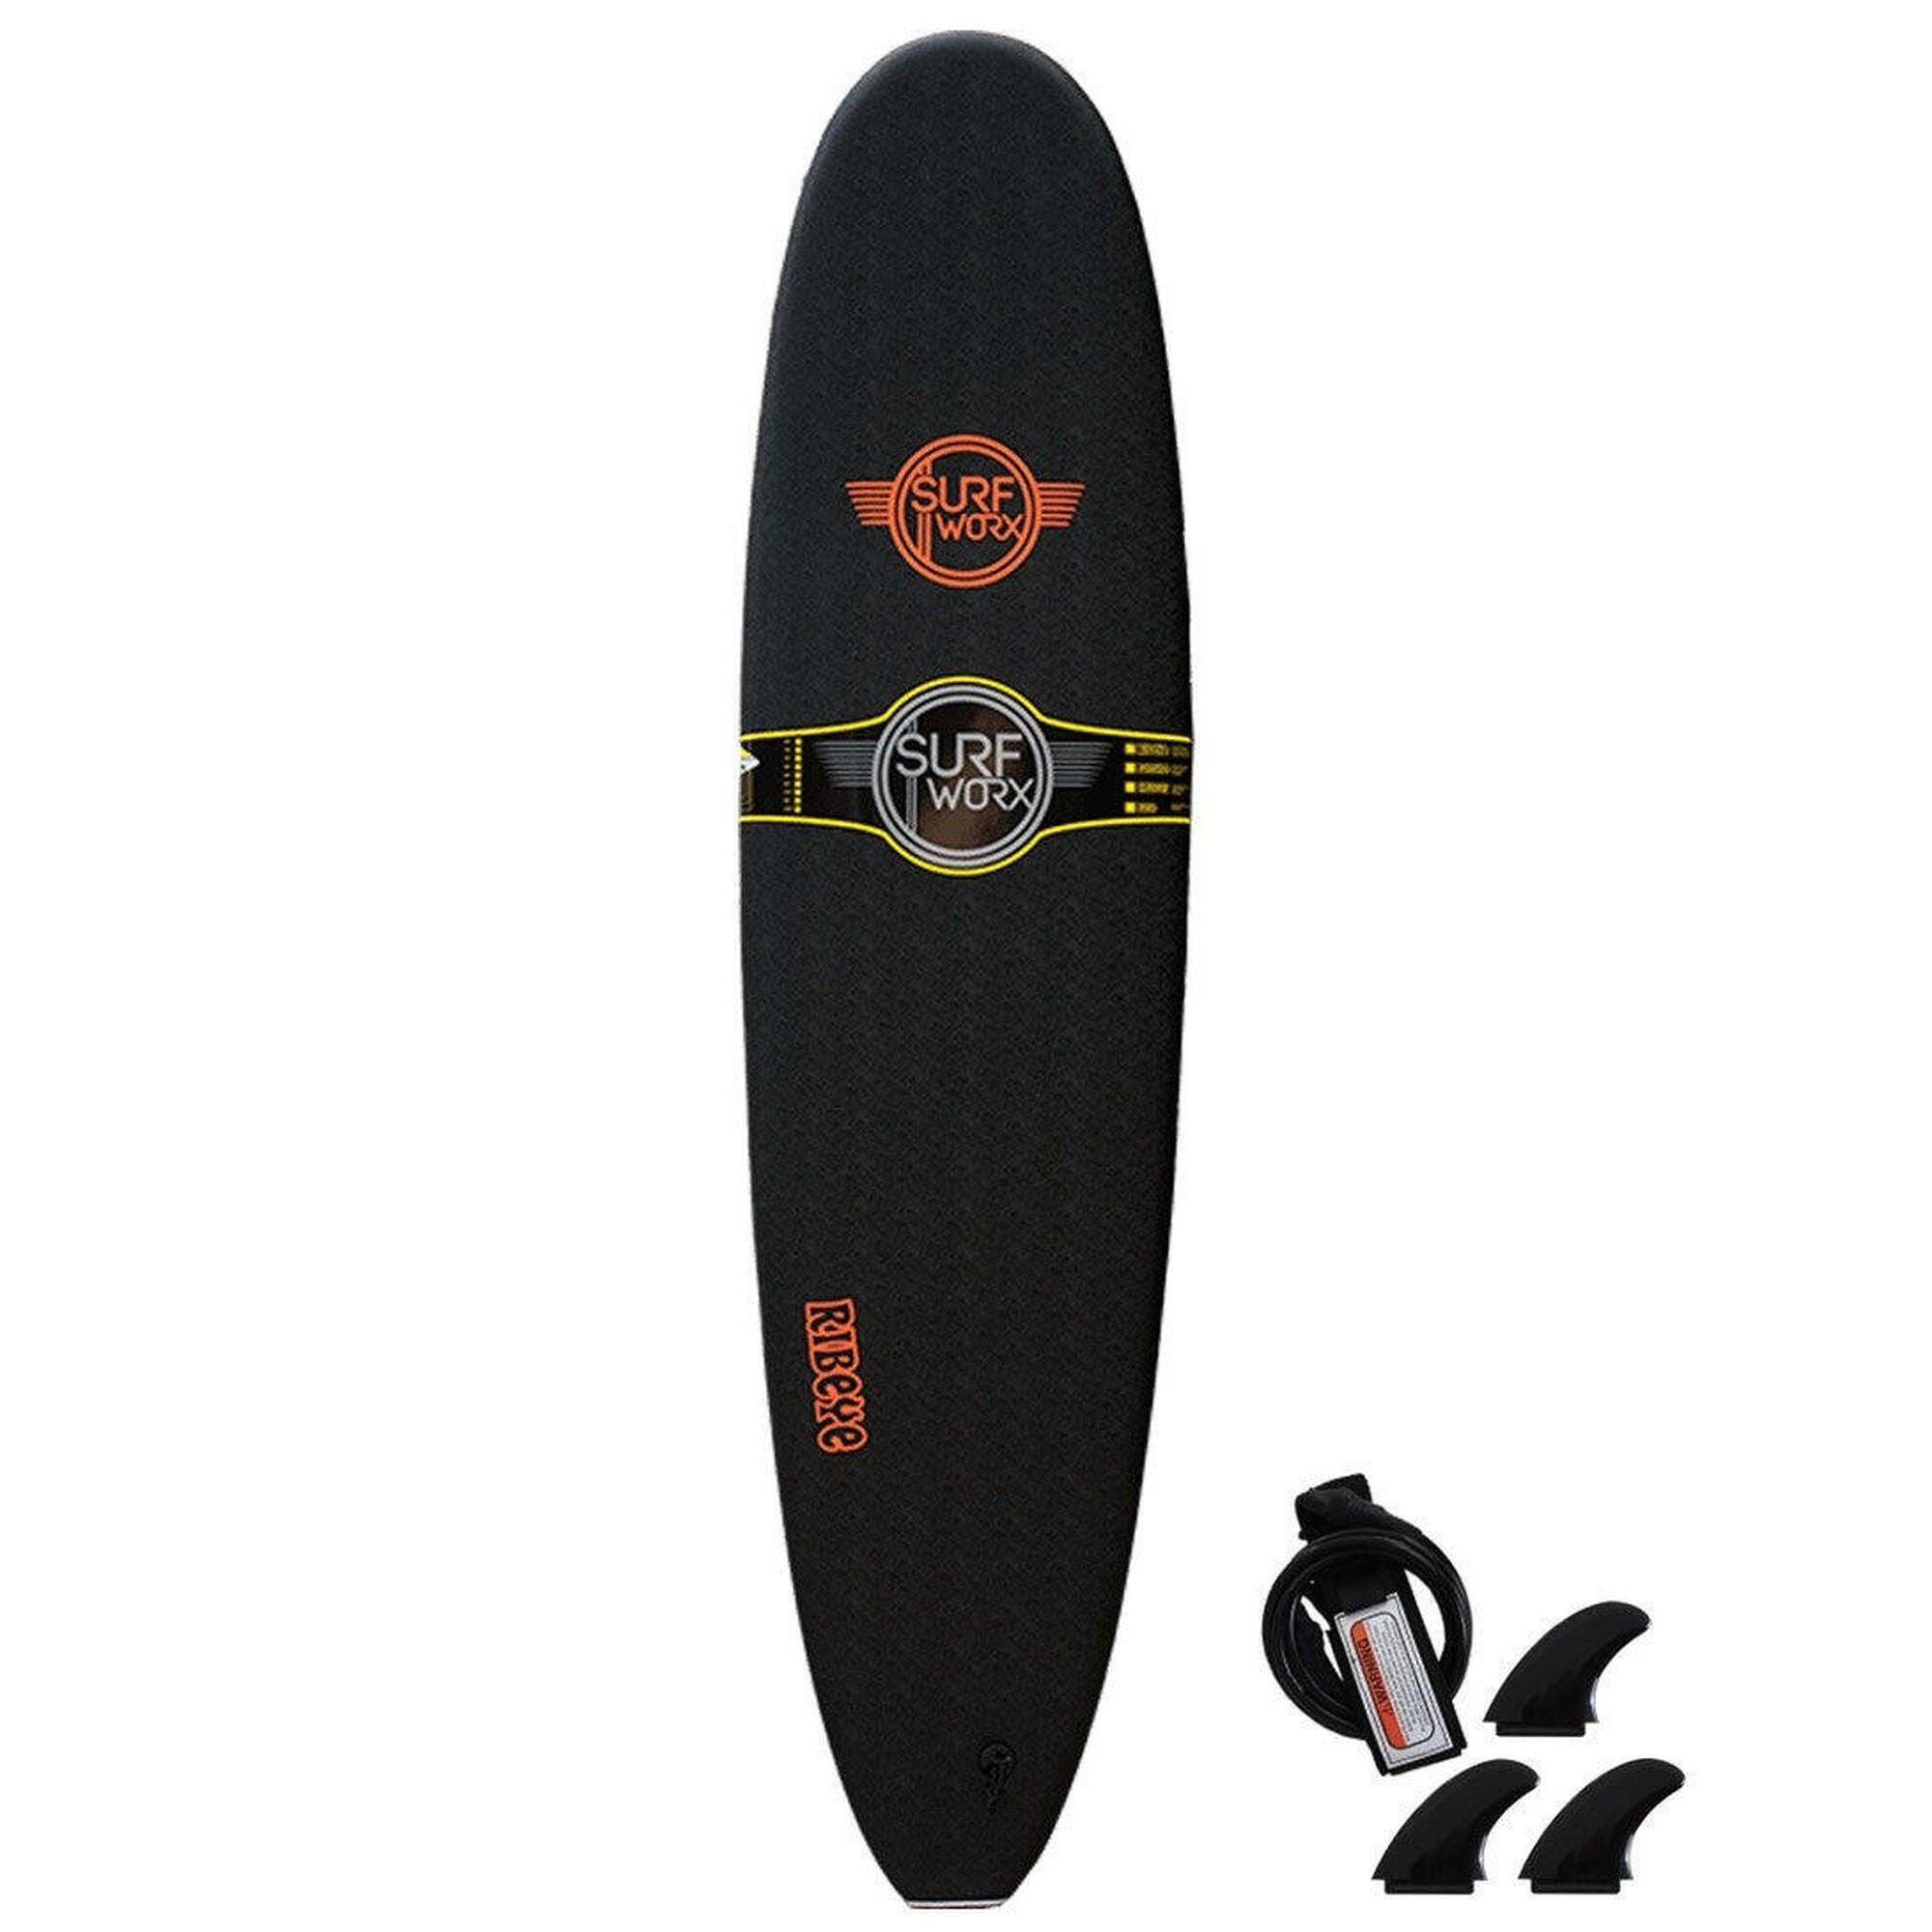 Surfworx Ribeye Mini Mal soft surfboard 8ft 0 Black 1/4